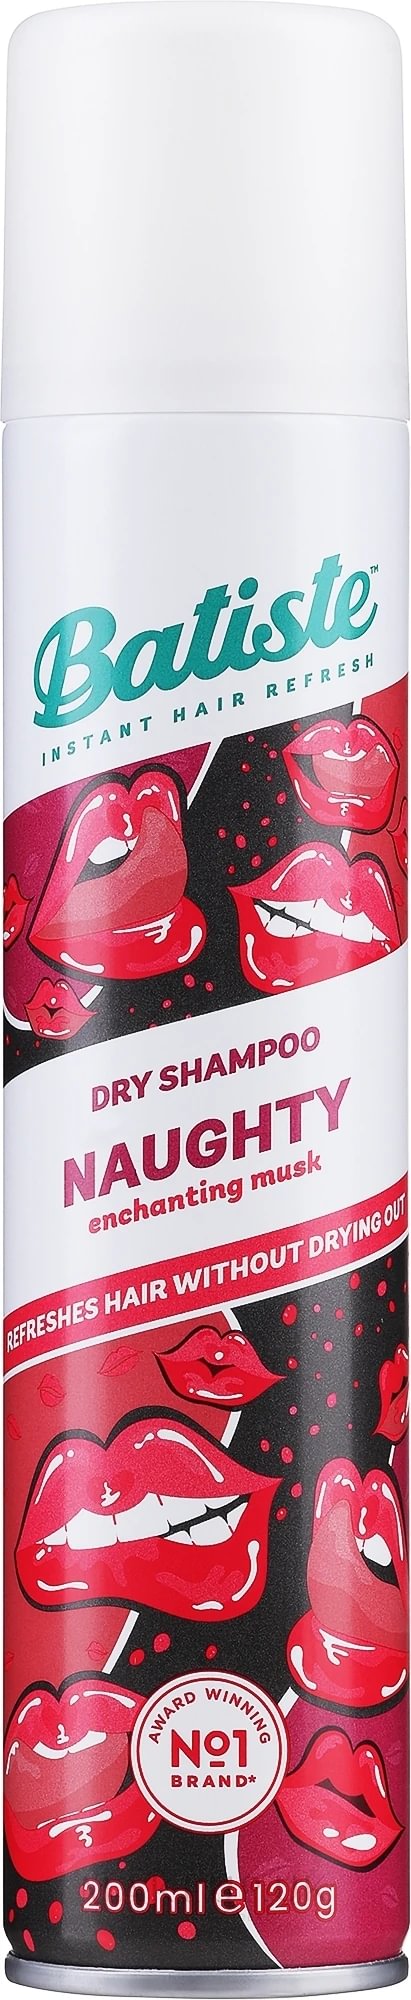 Batiste Naughty dry shampoo 200ml